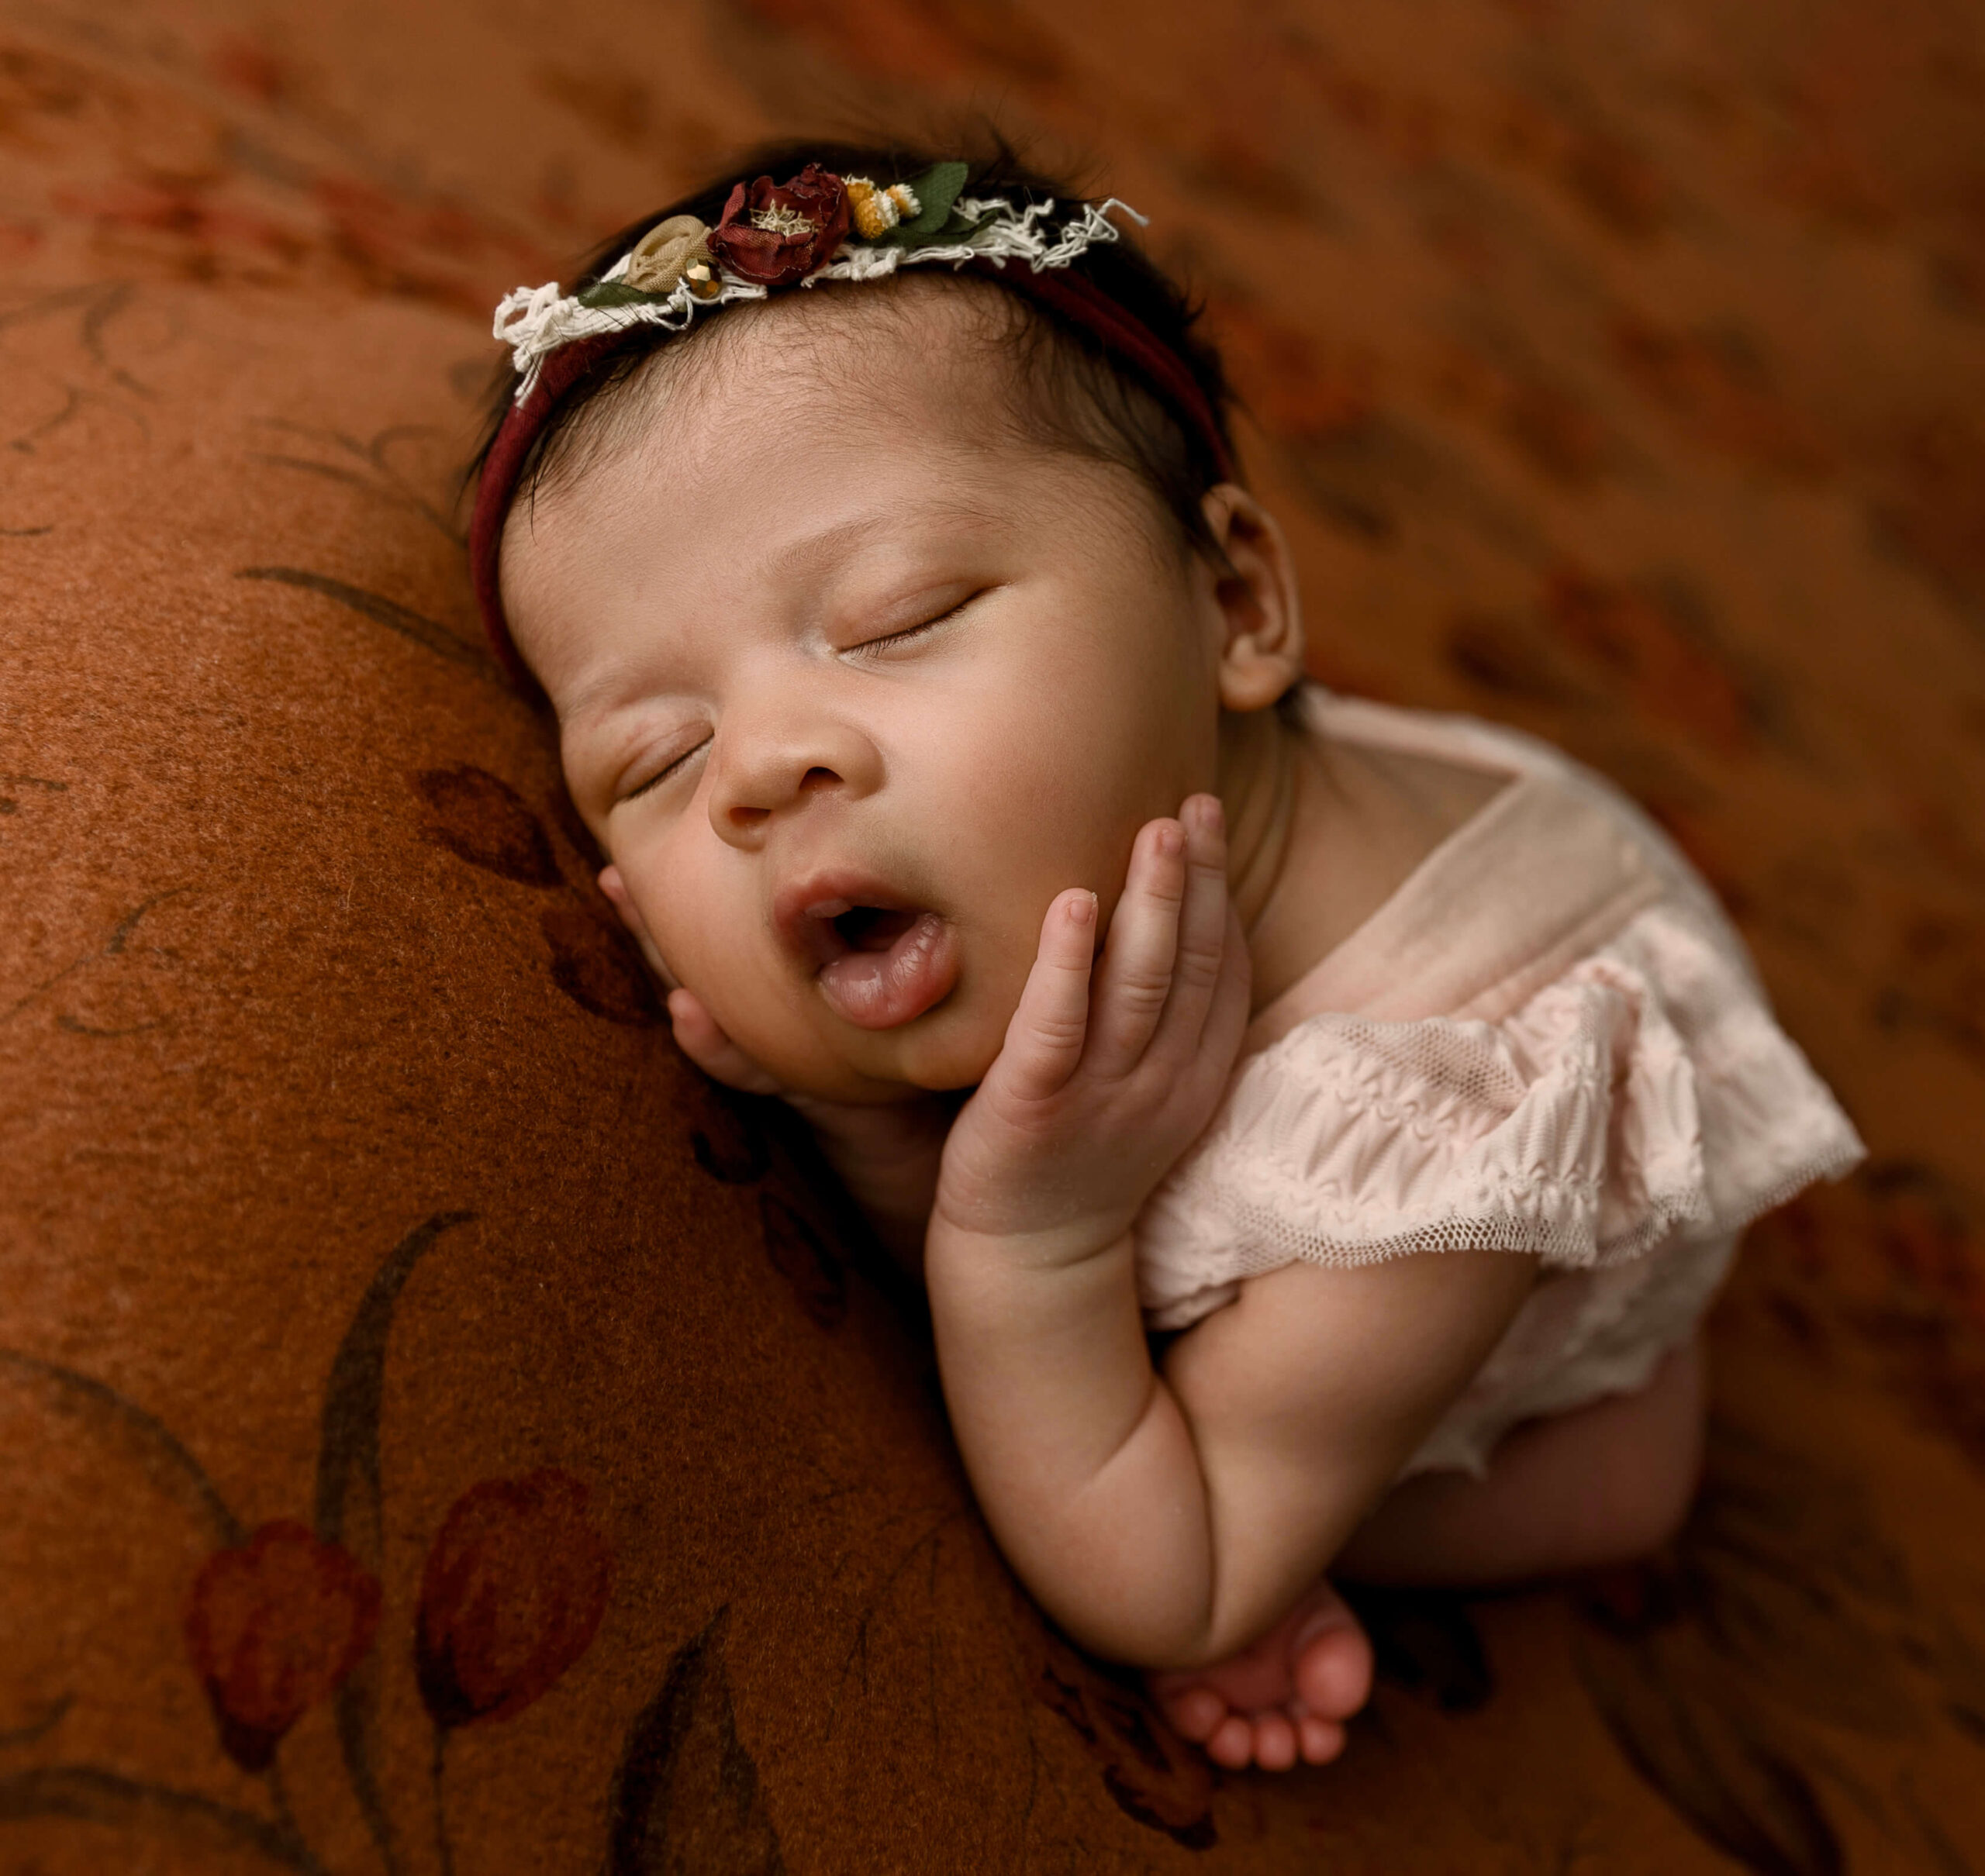 Newborn photo of a baby girl